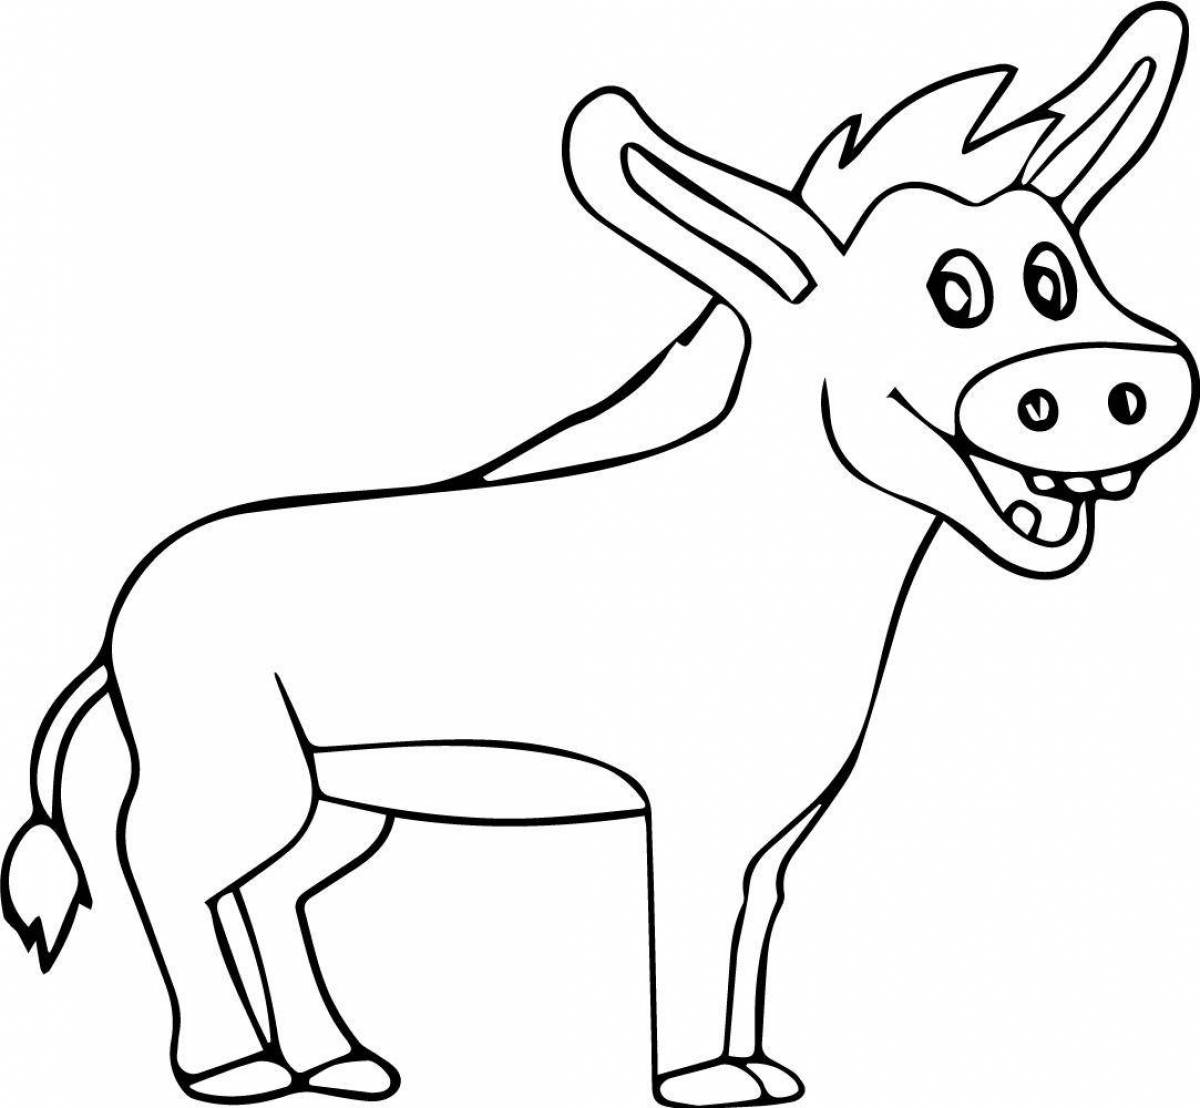 Playful coloring donkey from shrek